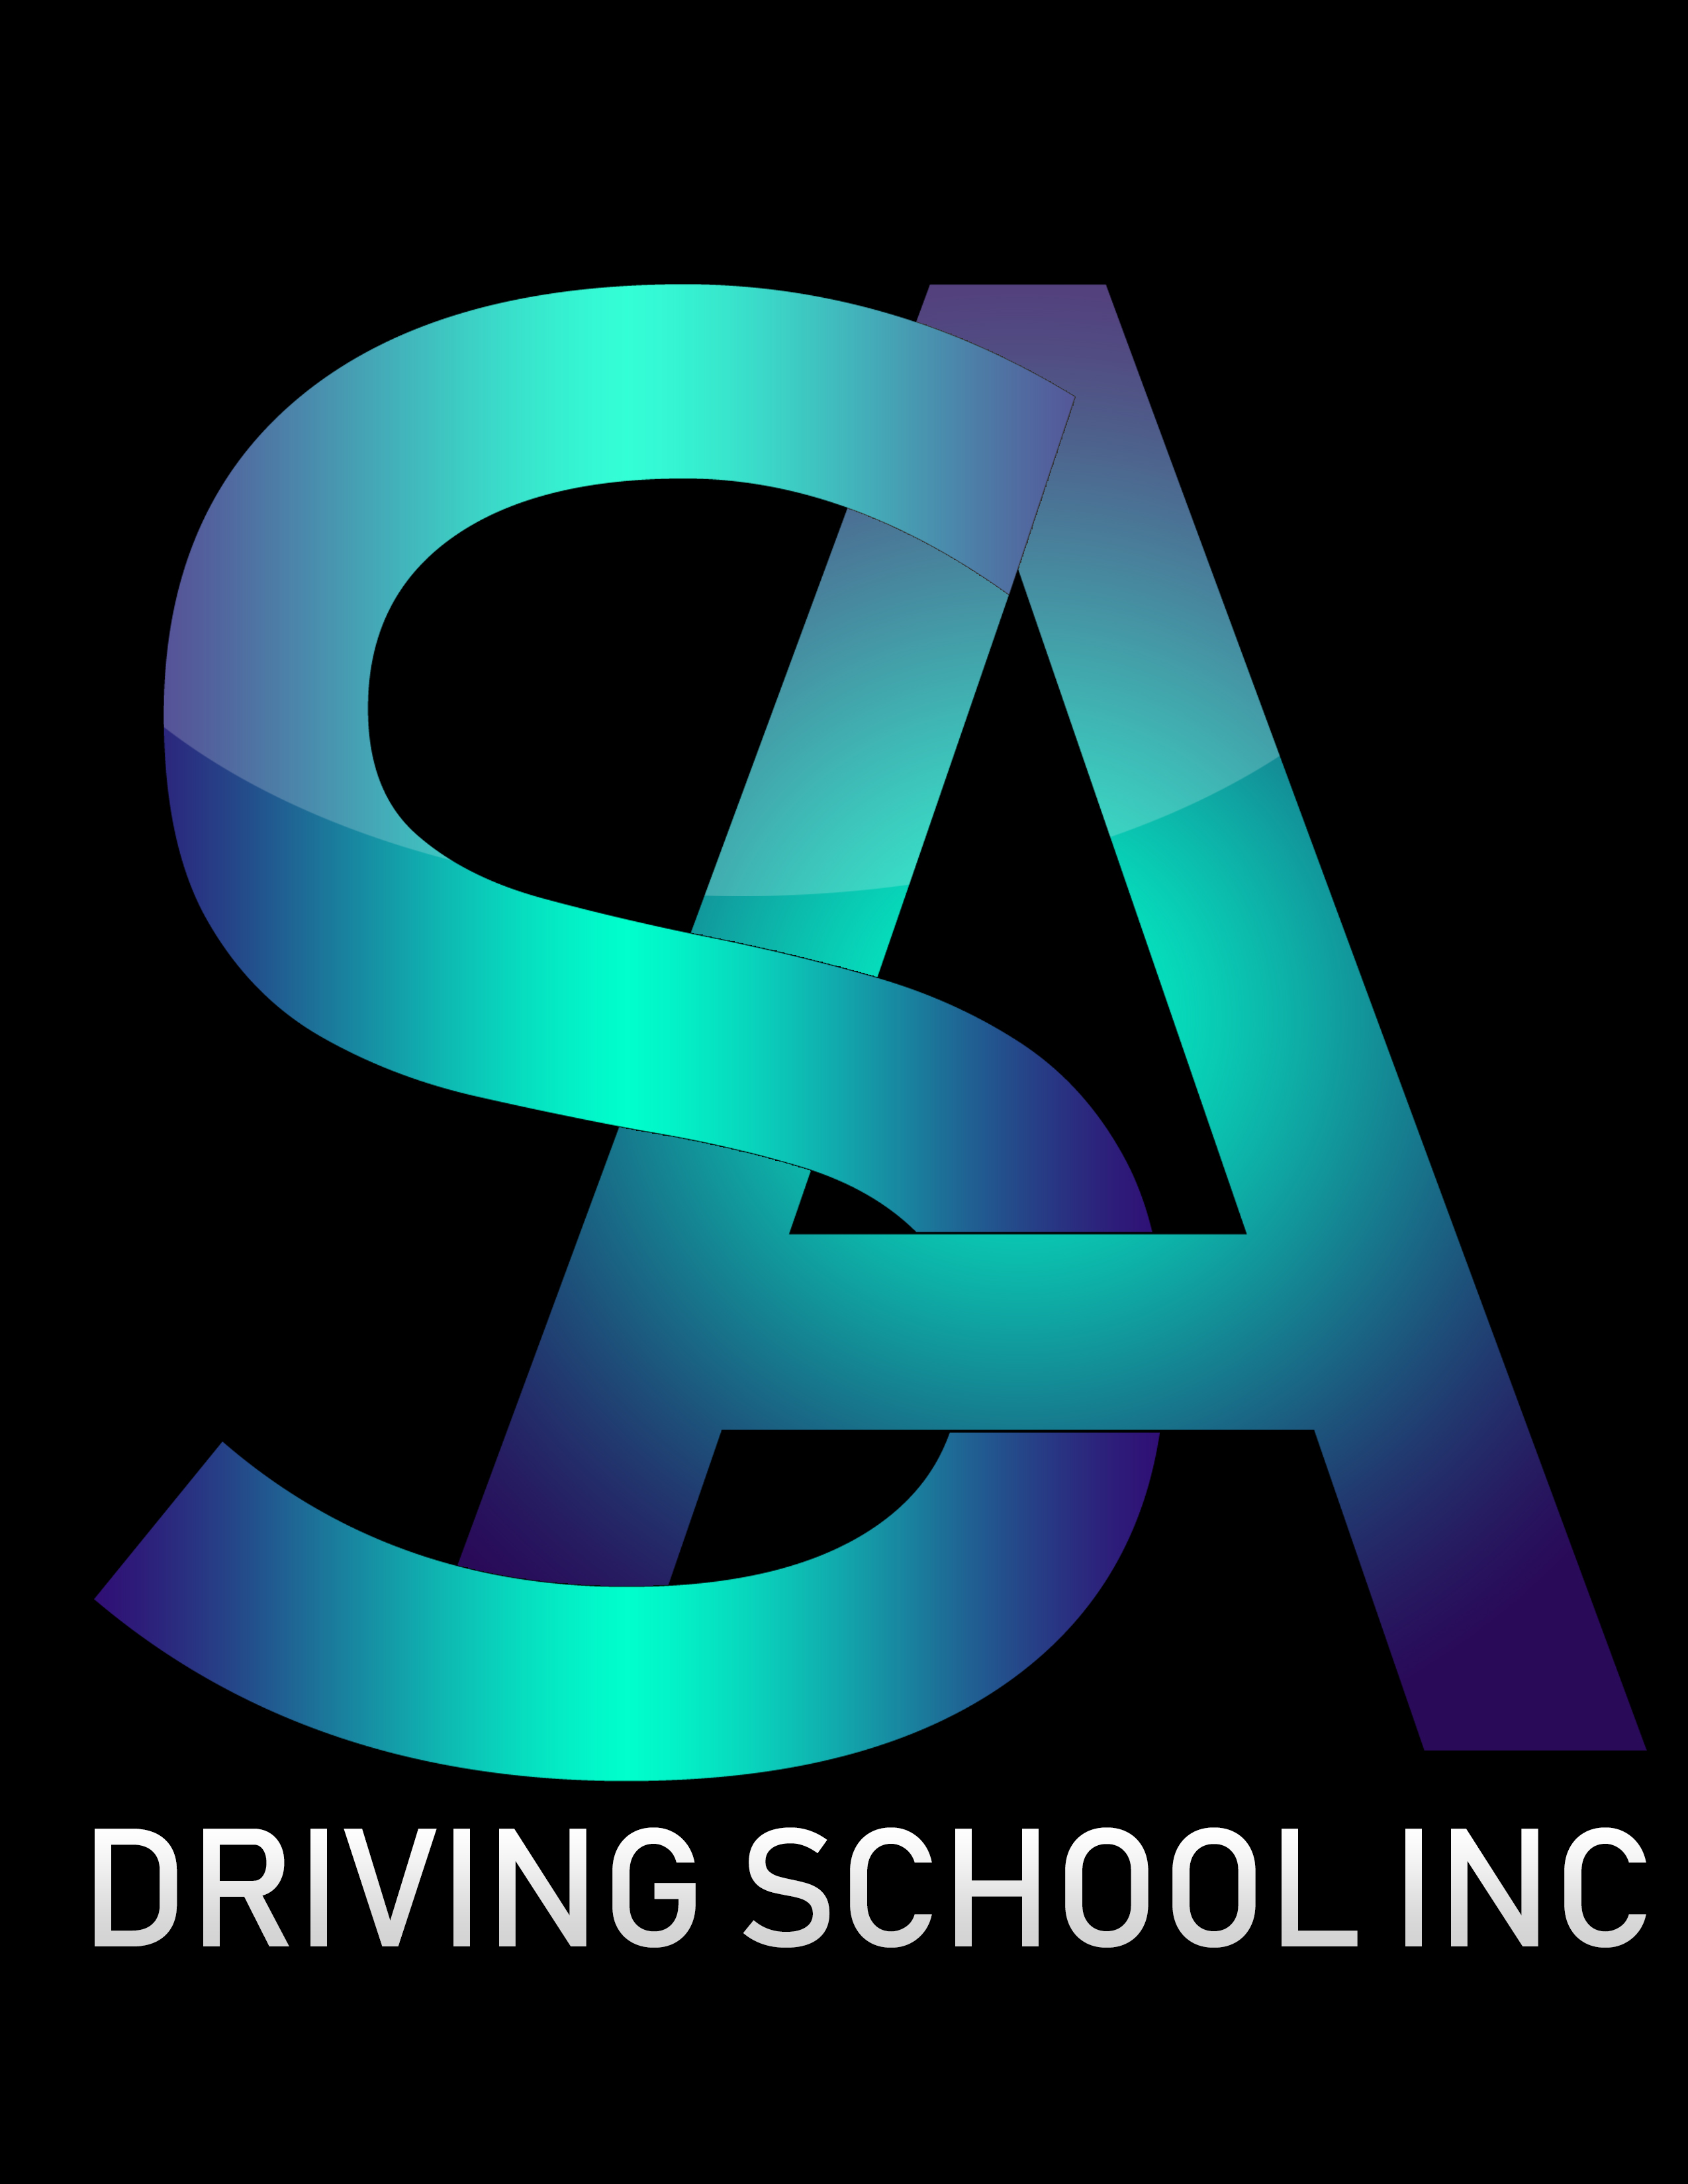 SA Driving School Inc Online Store